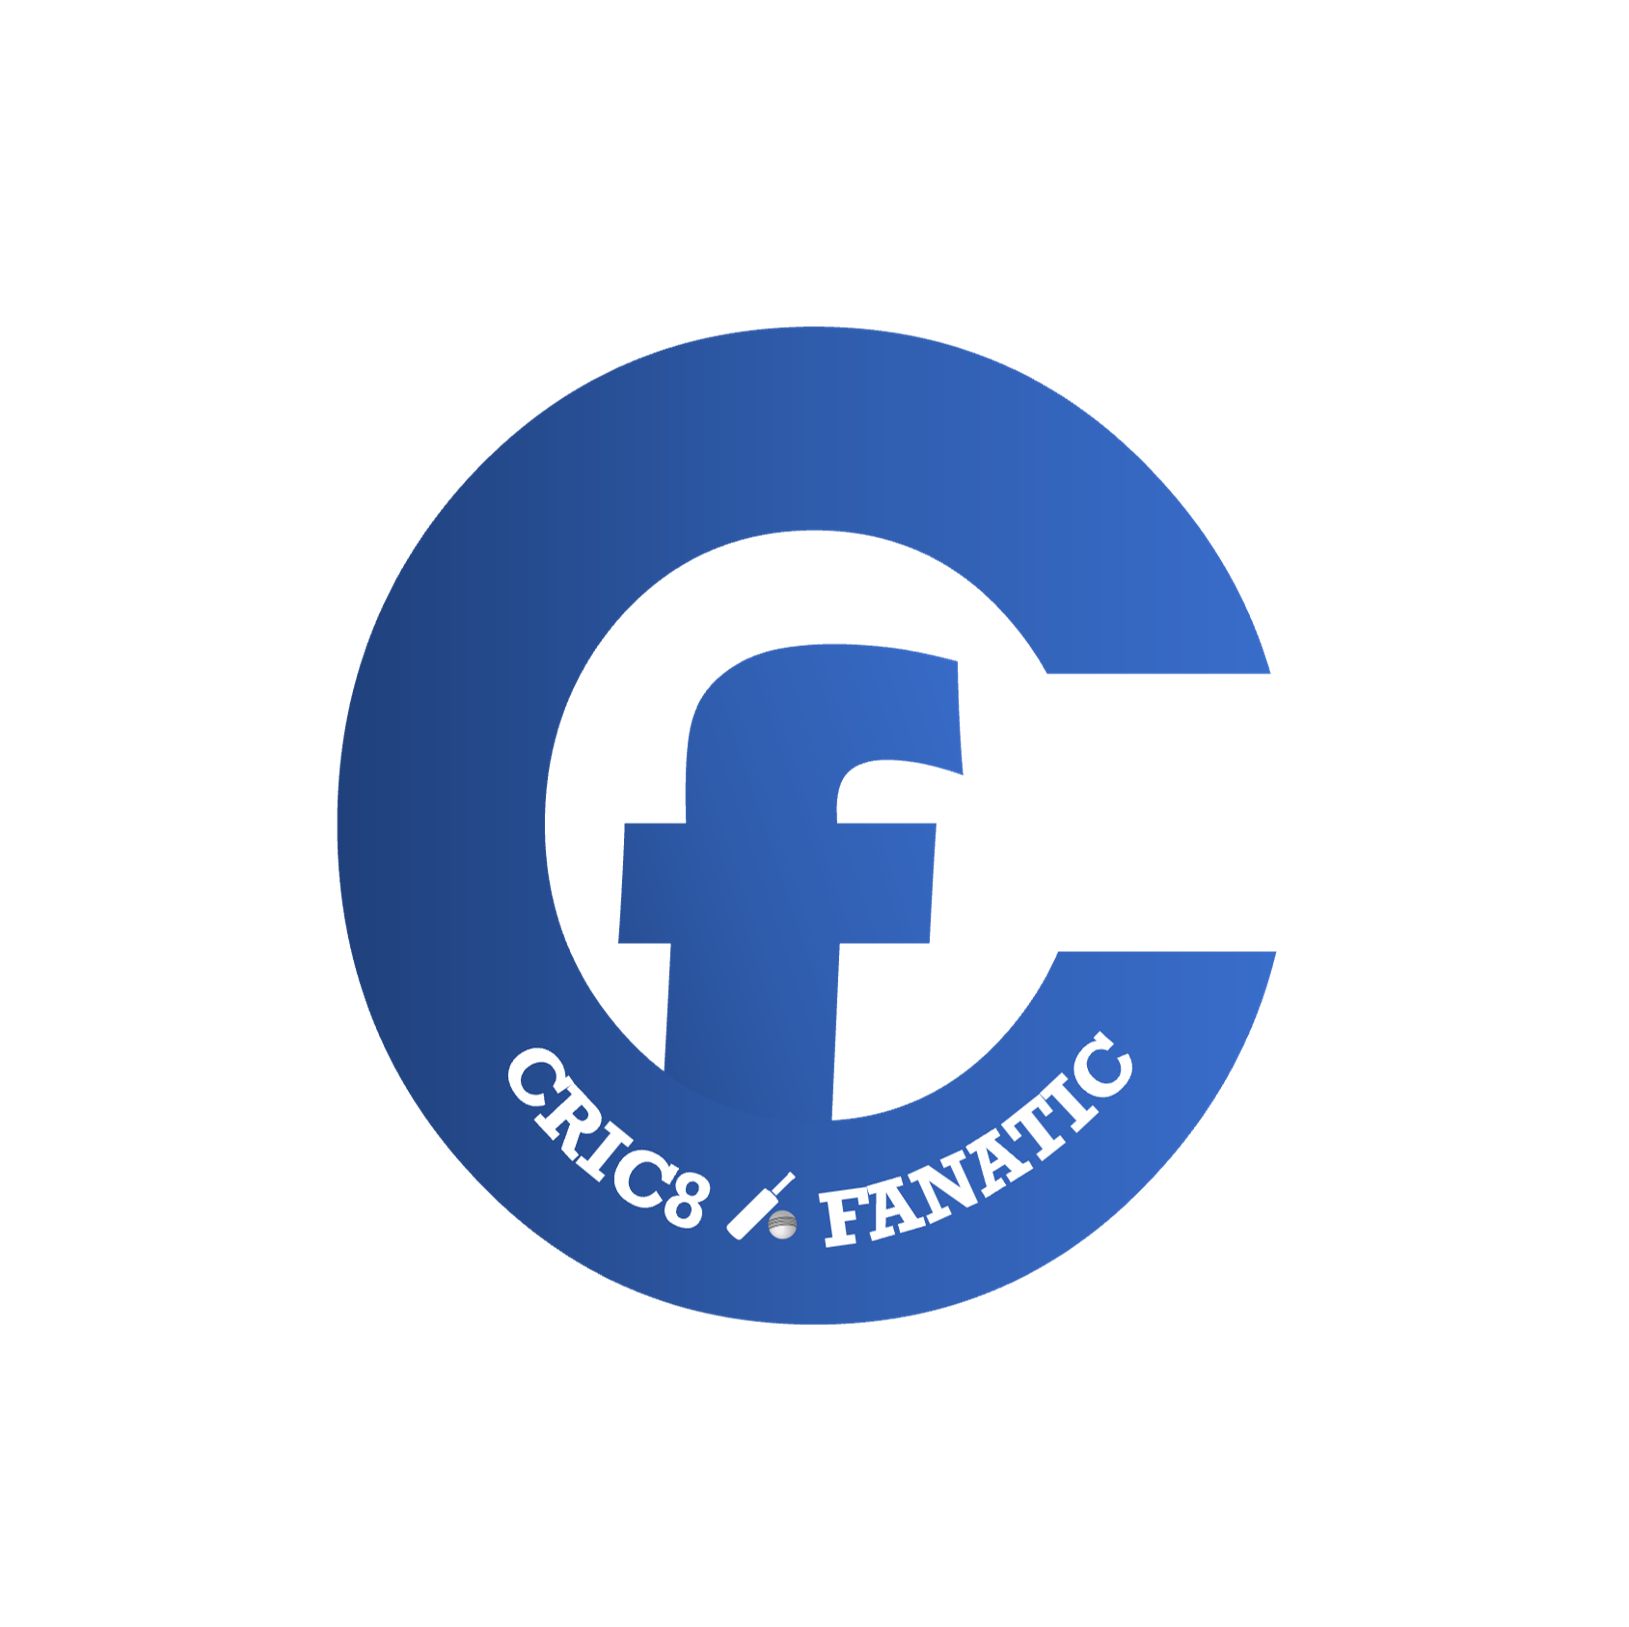 Cric8fanatic logo